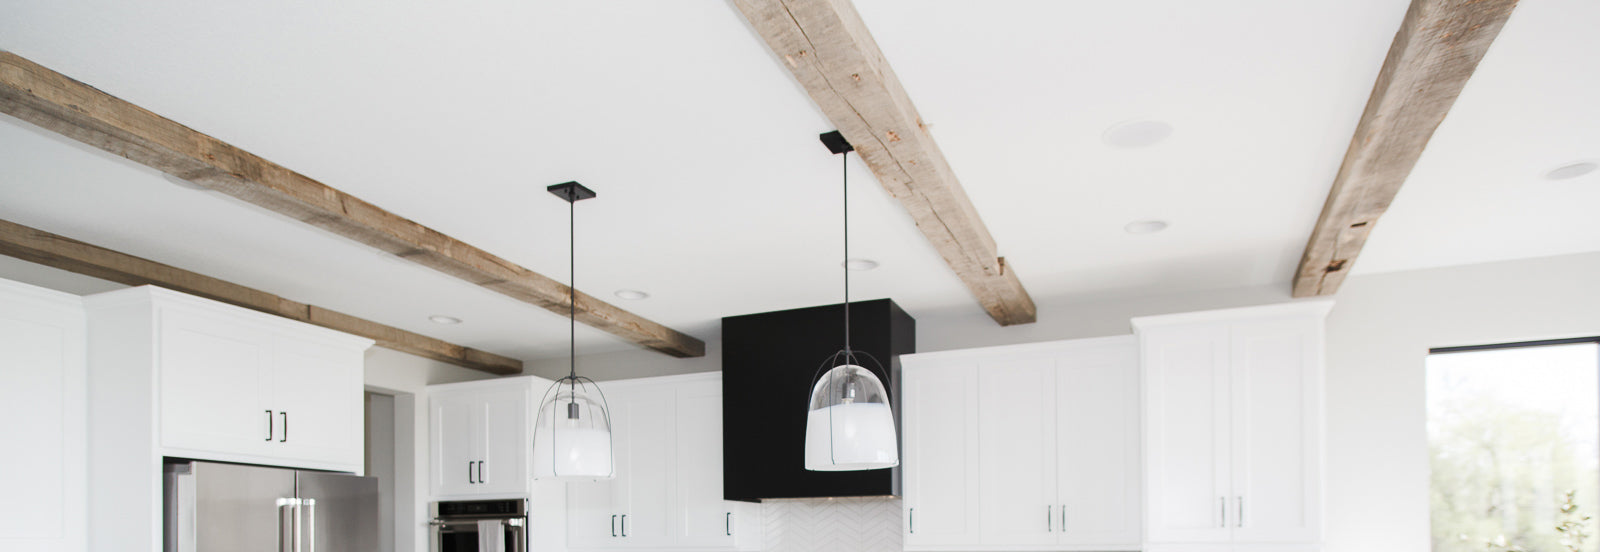 Reclaimed Wood Ceiling Beams and Mantel | Dakota Timber Company | Rustic Timber Beams | Studio West Fargo | Homebuilders in Fargo | Light Sanded Ceiling Beams | Modern Living Room